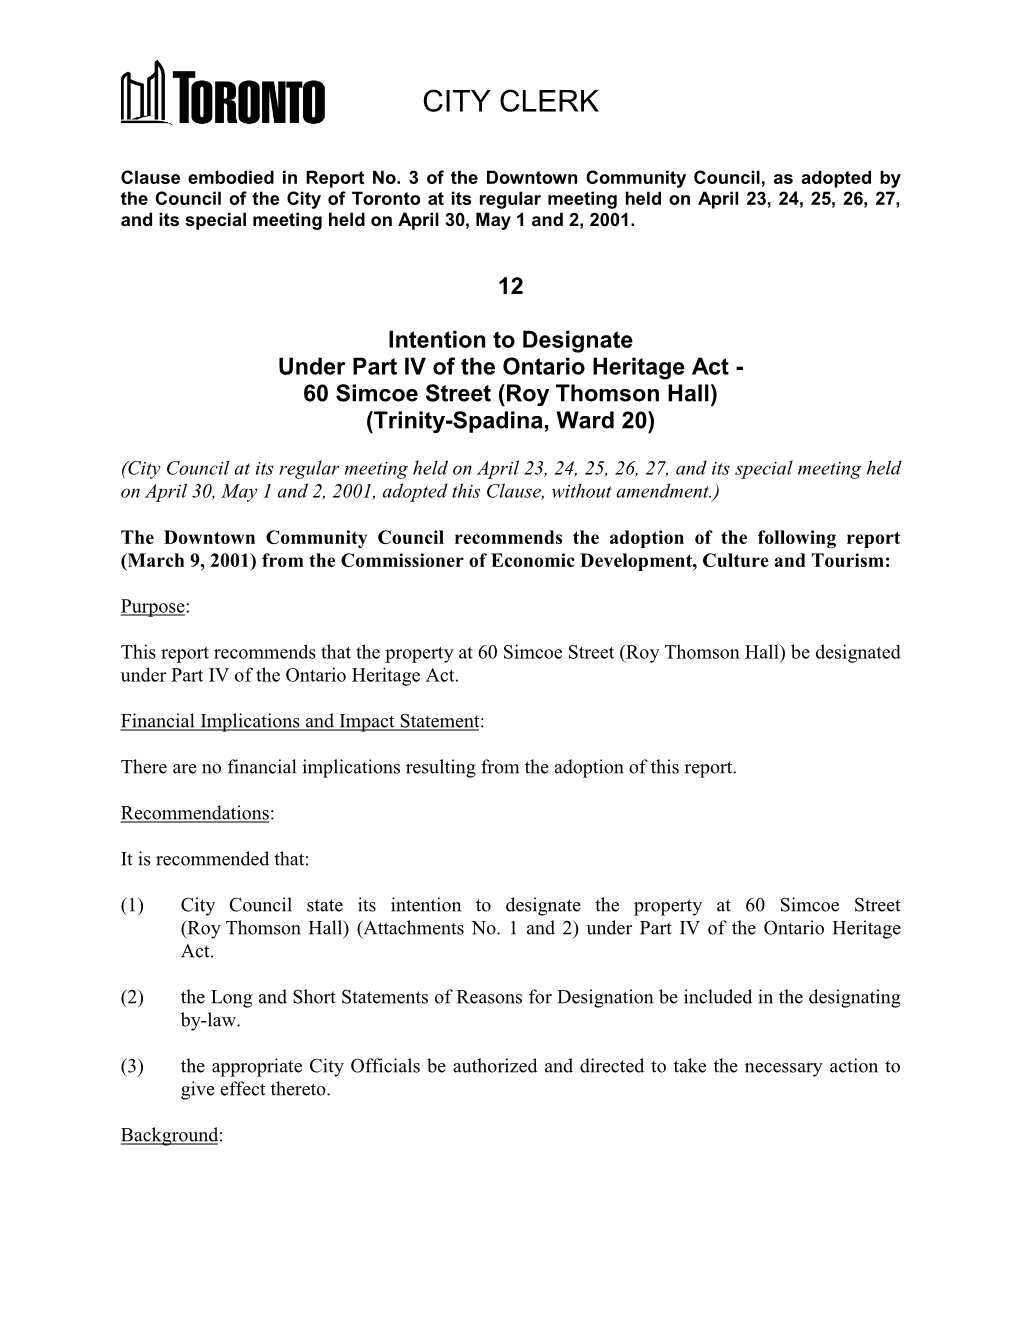 Intention to Designate Under Part IV of the Ontario Heritage Act - 60 Simcoe Street (Roy Thomson Hall) (Trinity-Spadina, Ward 20)